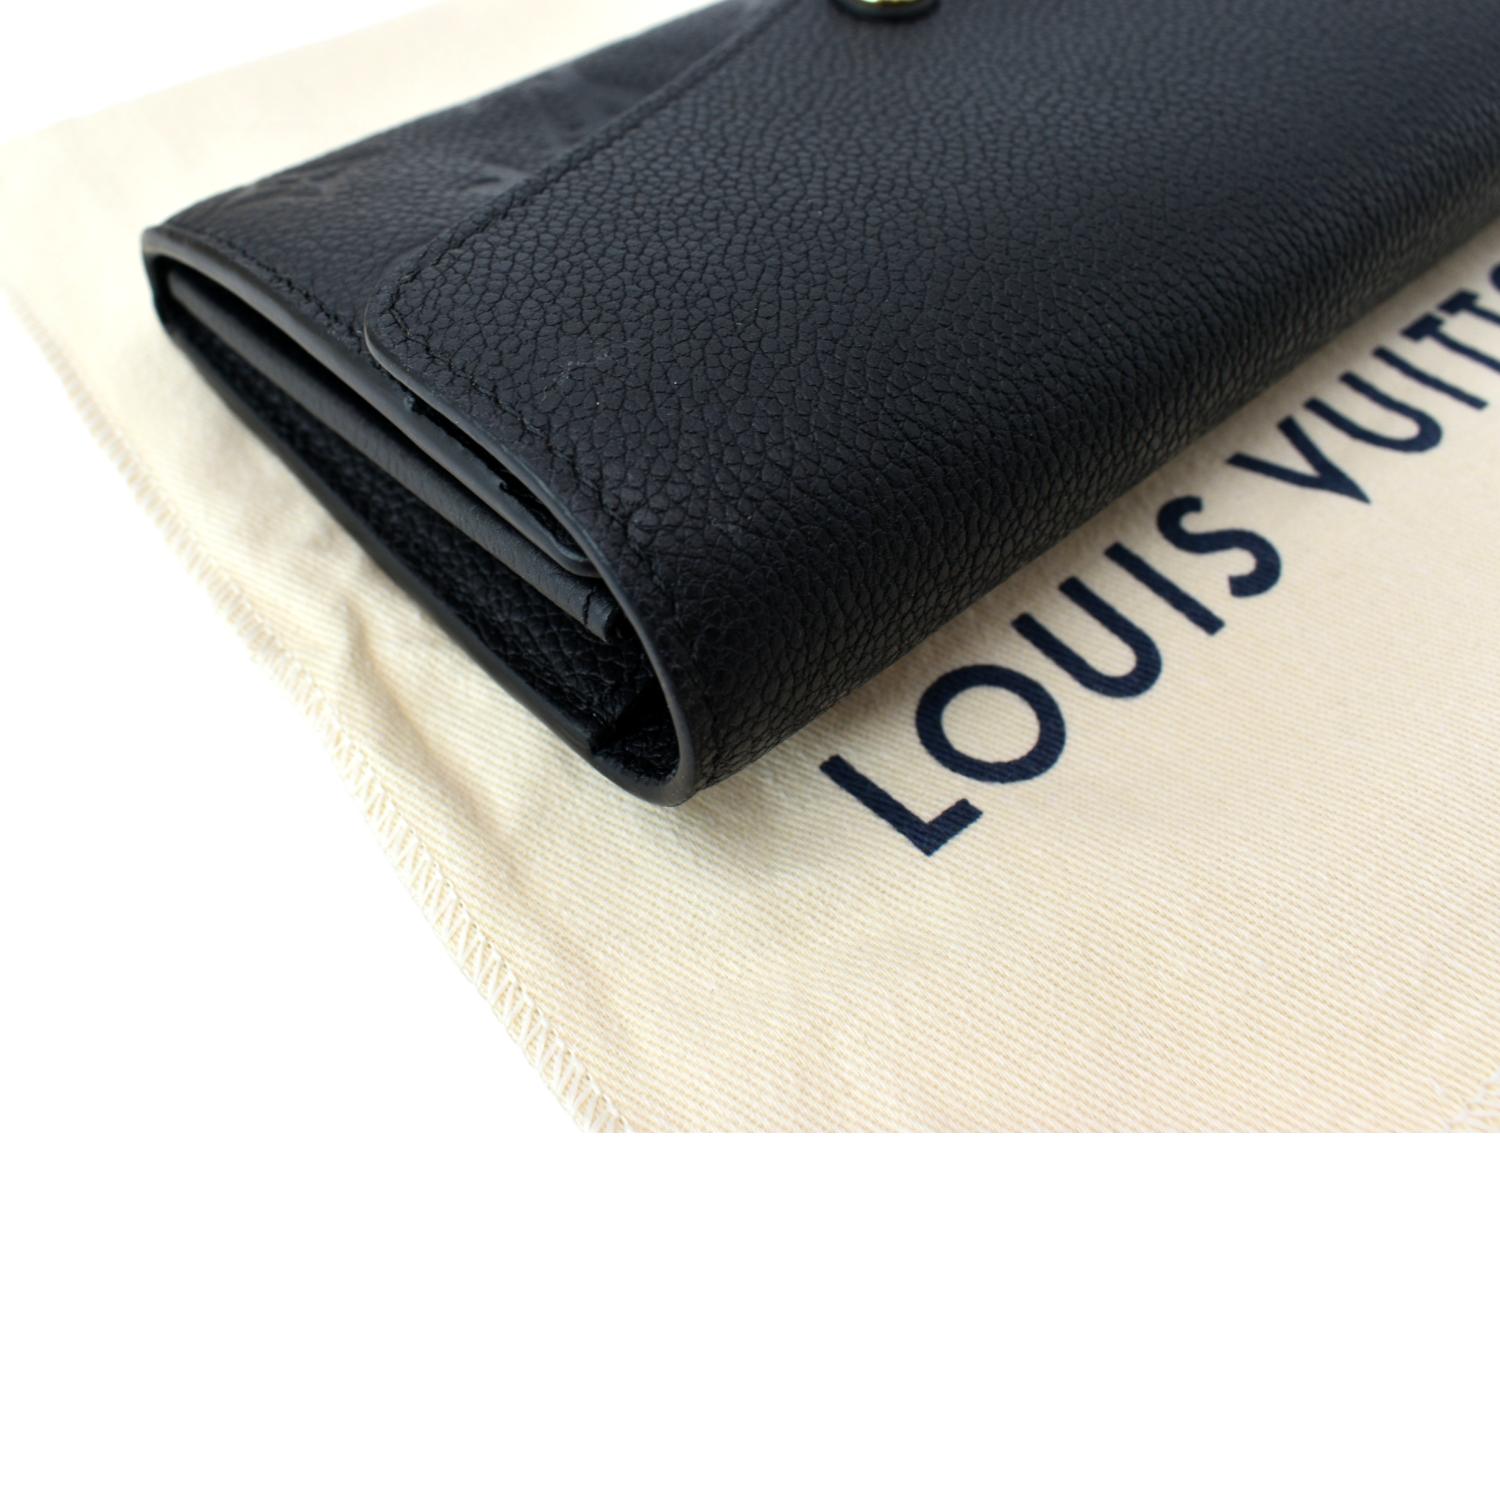 Louis Vuitton Monogram Empreinte Sarah Wallet M62125 Black Leather